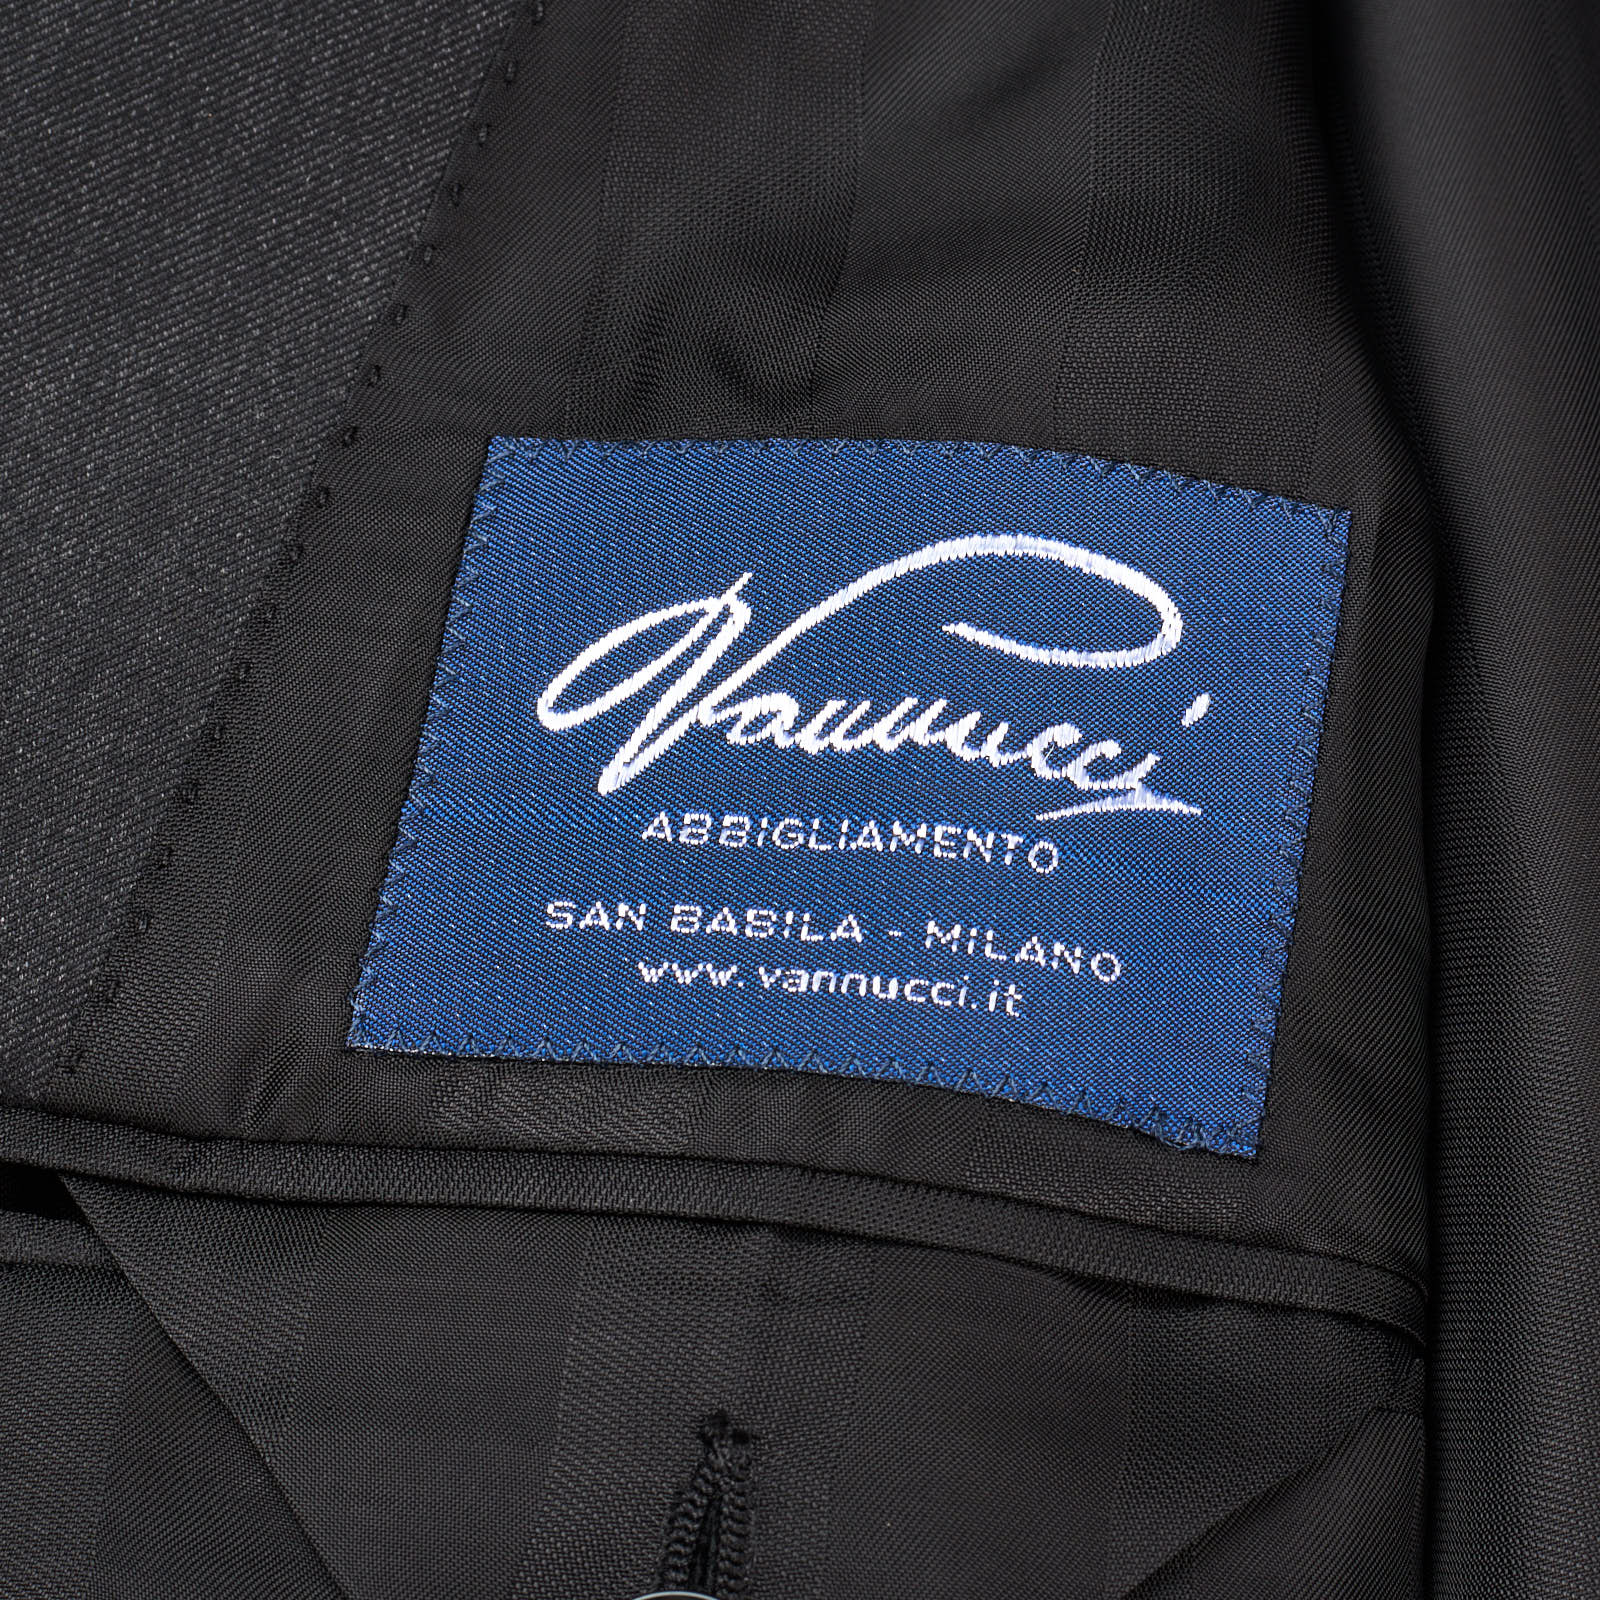 VANNUCCI Gray Tasmanian Wool Super 150's Peak Lapel Suit EU 48 NEW US 38